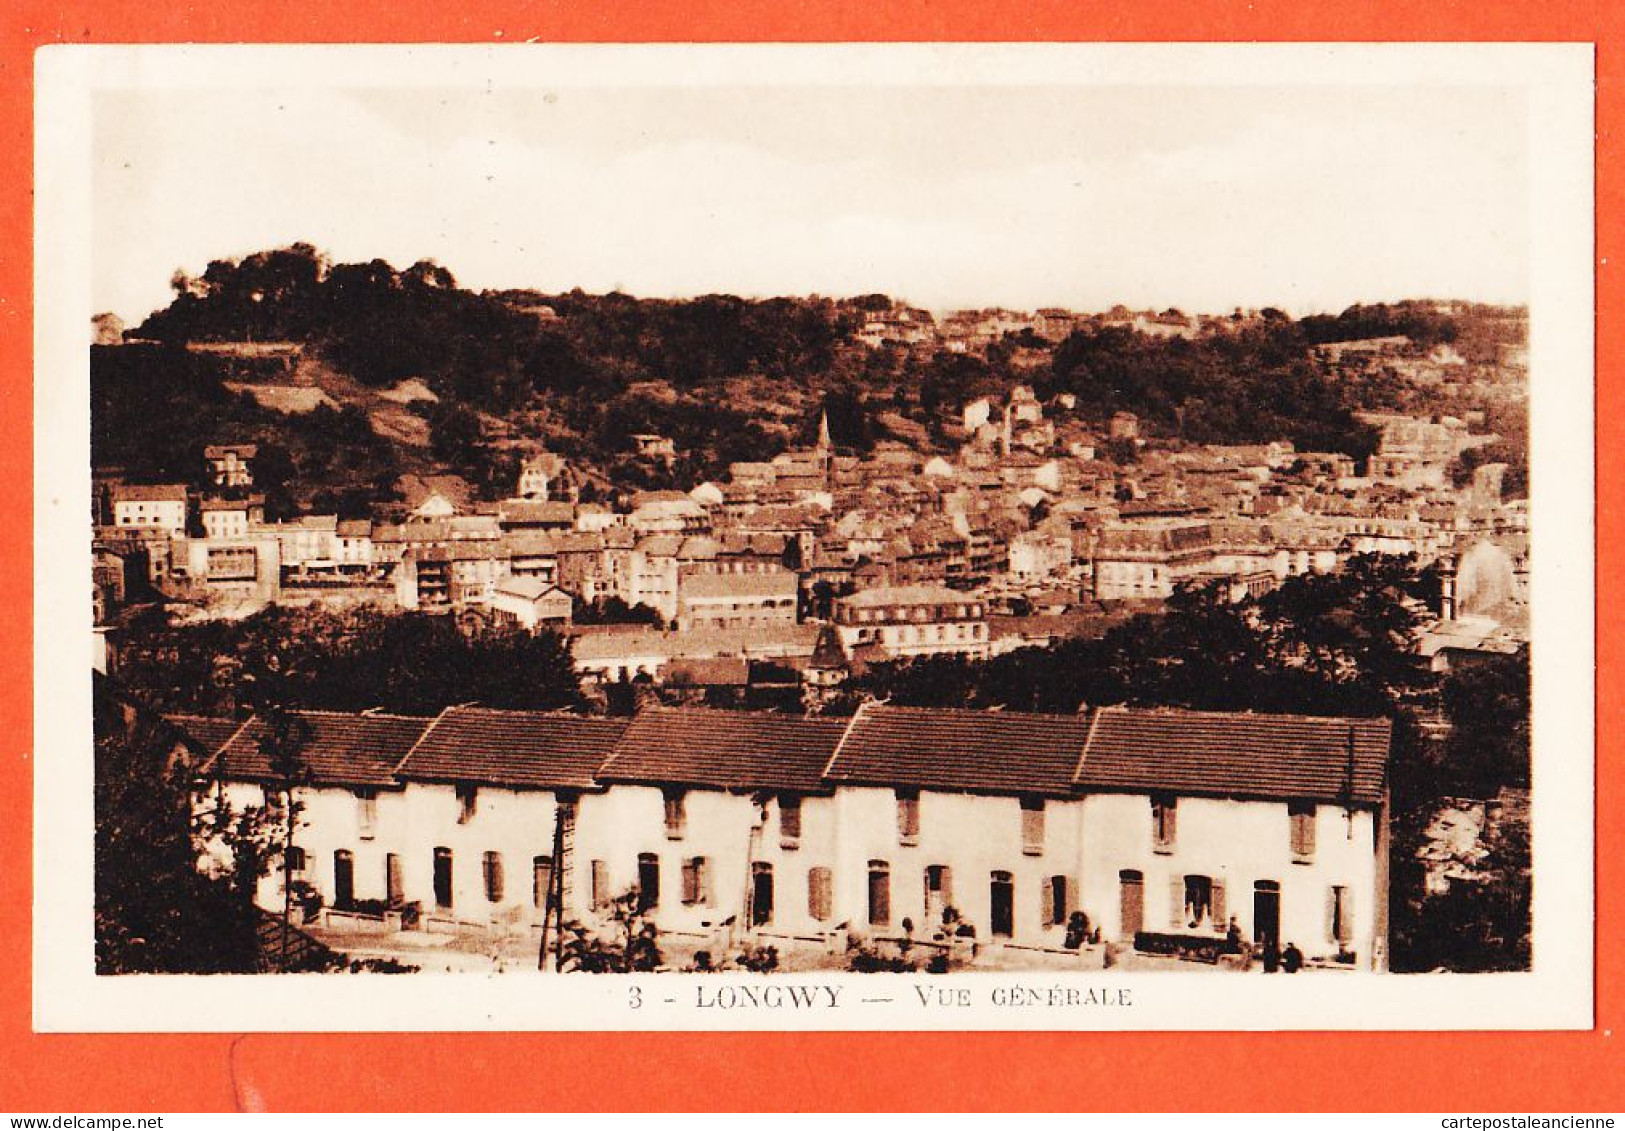 30948 / LONGWY 54-Meurthe Moselle Vue Generale Quai Gare 1940s Photo-Bromure REANT 3 - Longwy